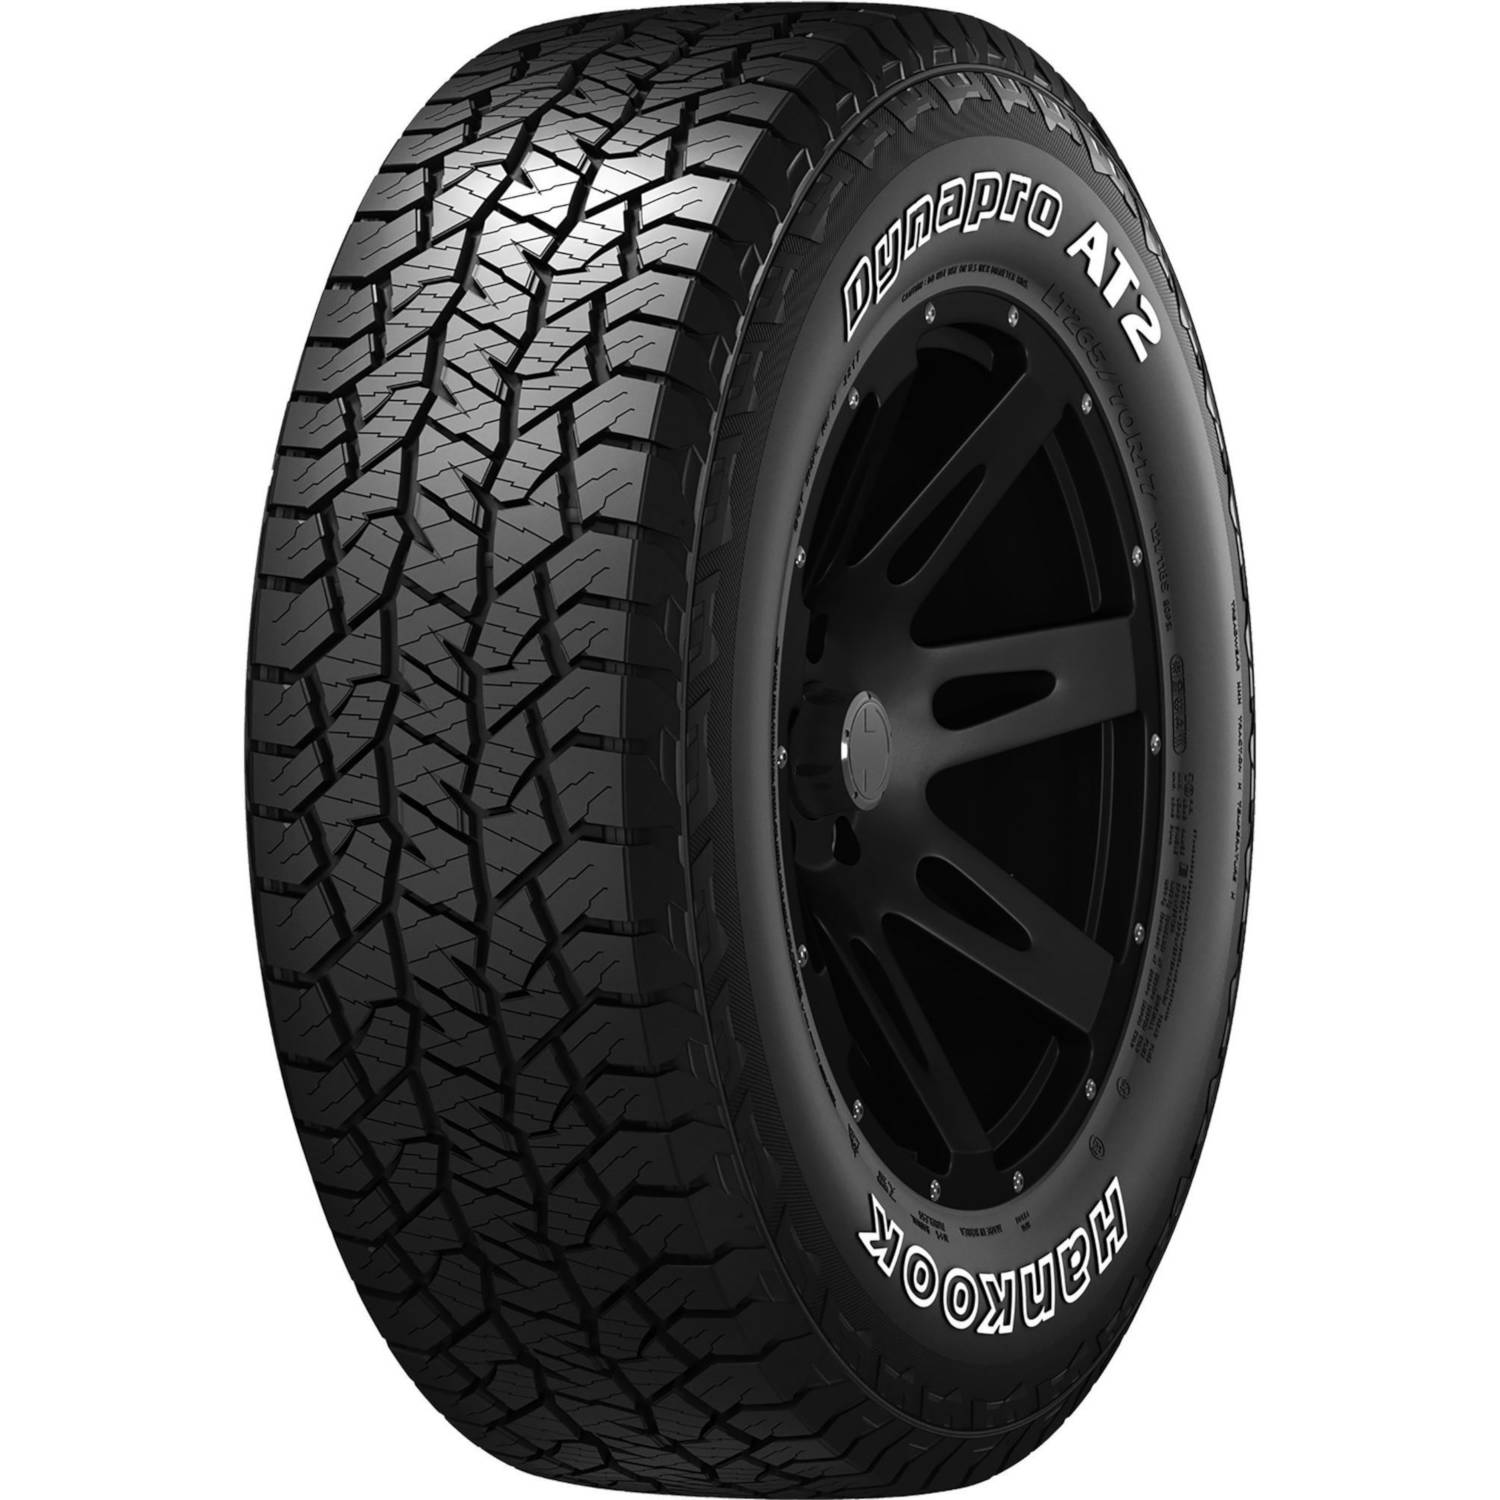 HANKOOK DYNAPRO AT2 235/75R15 XL (28.8X9.3R 15) Tires